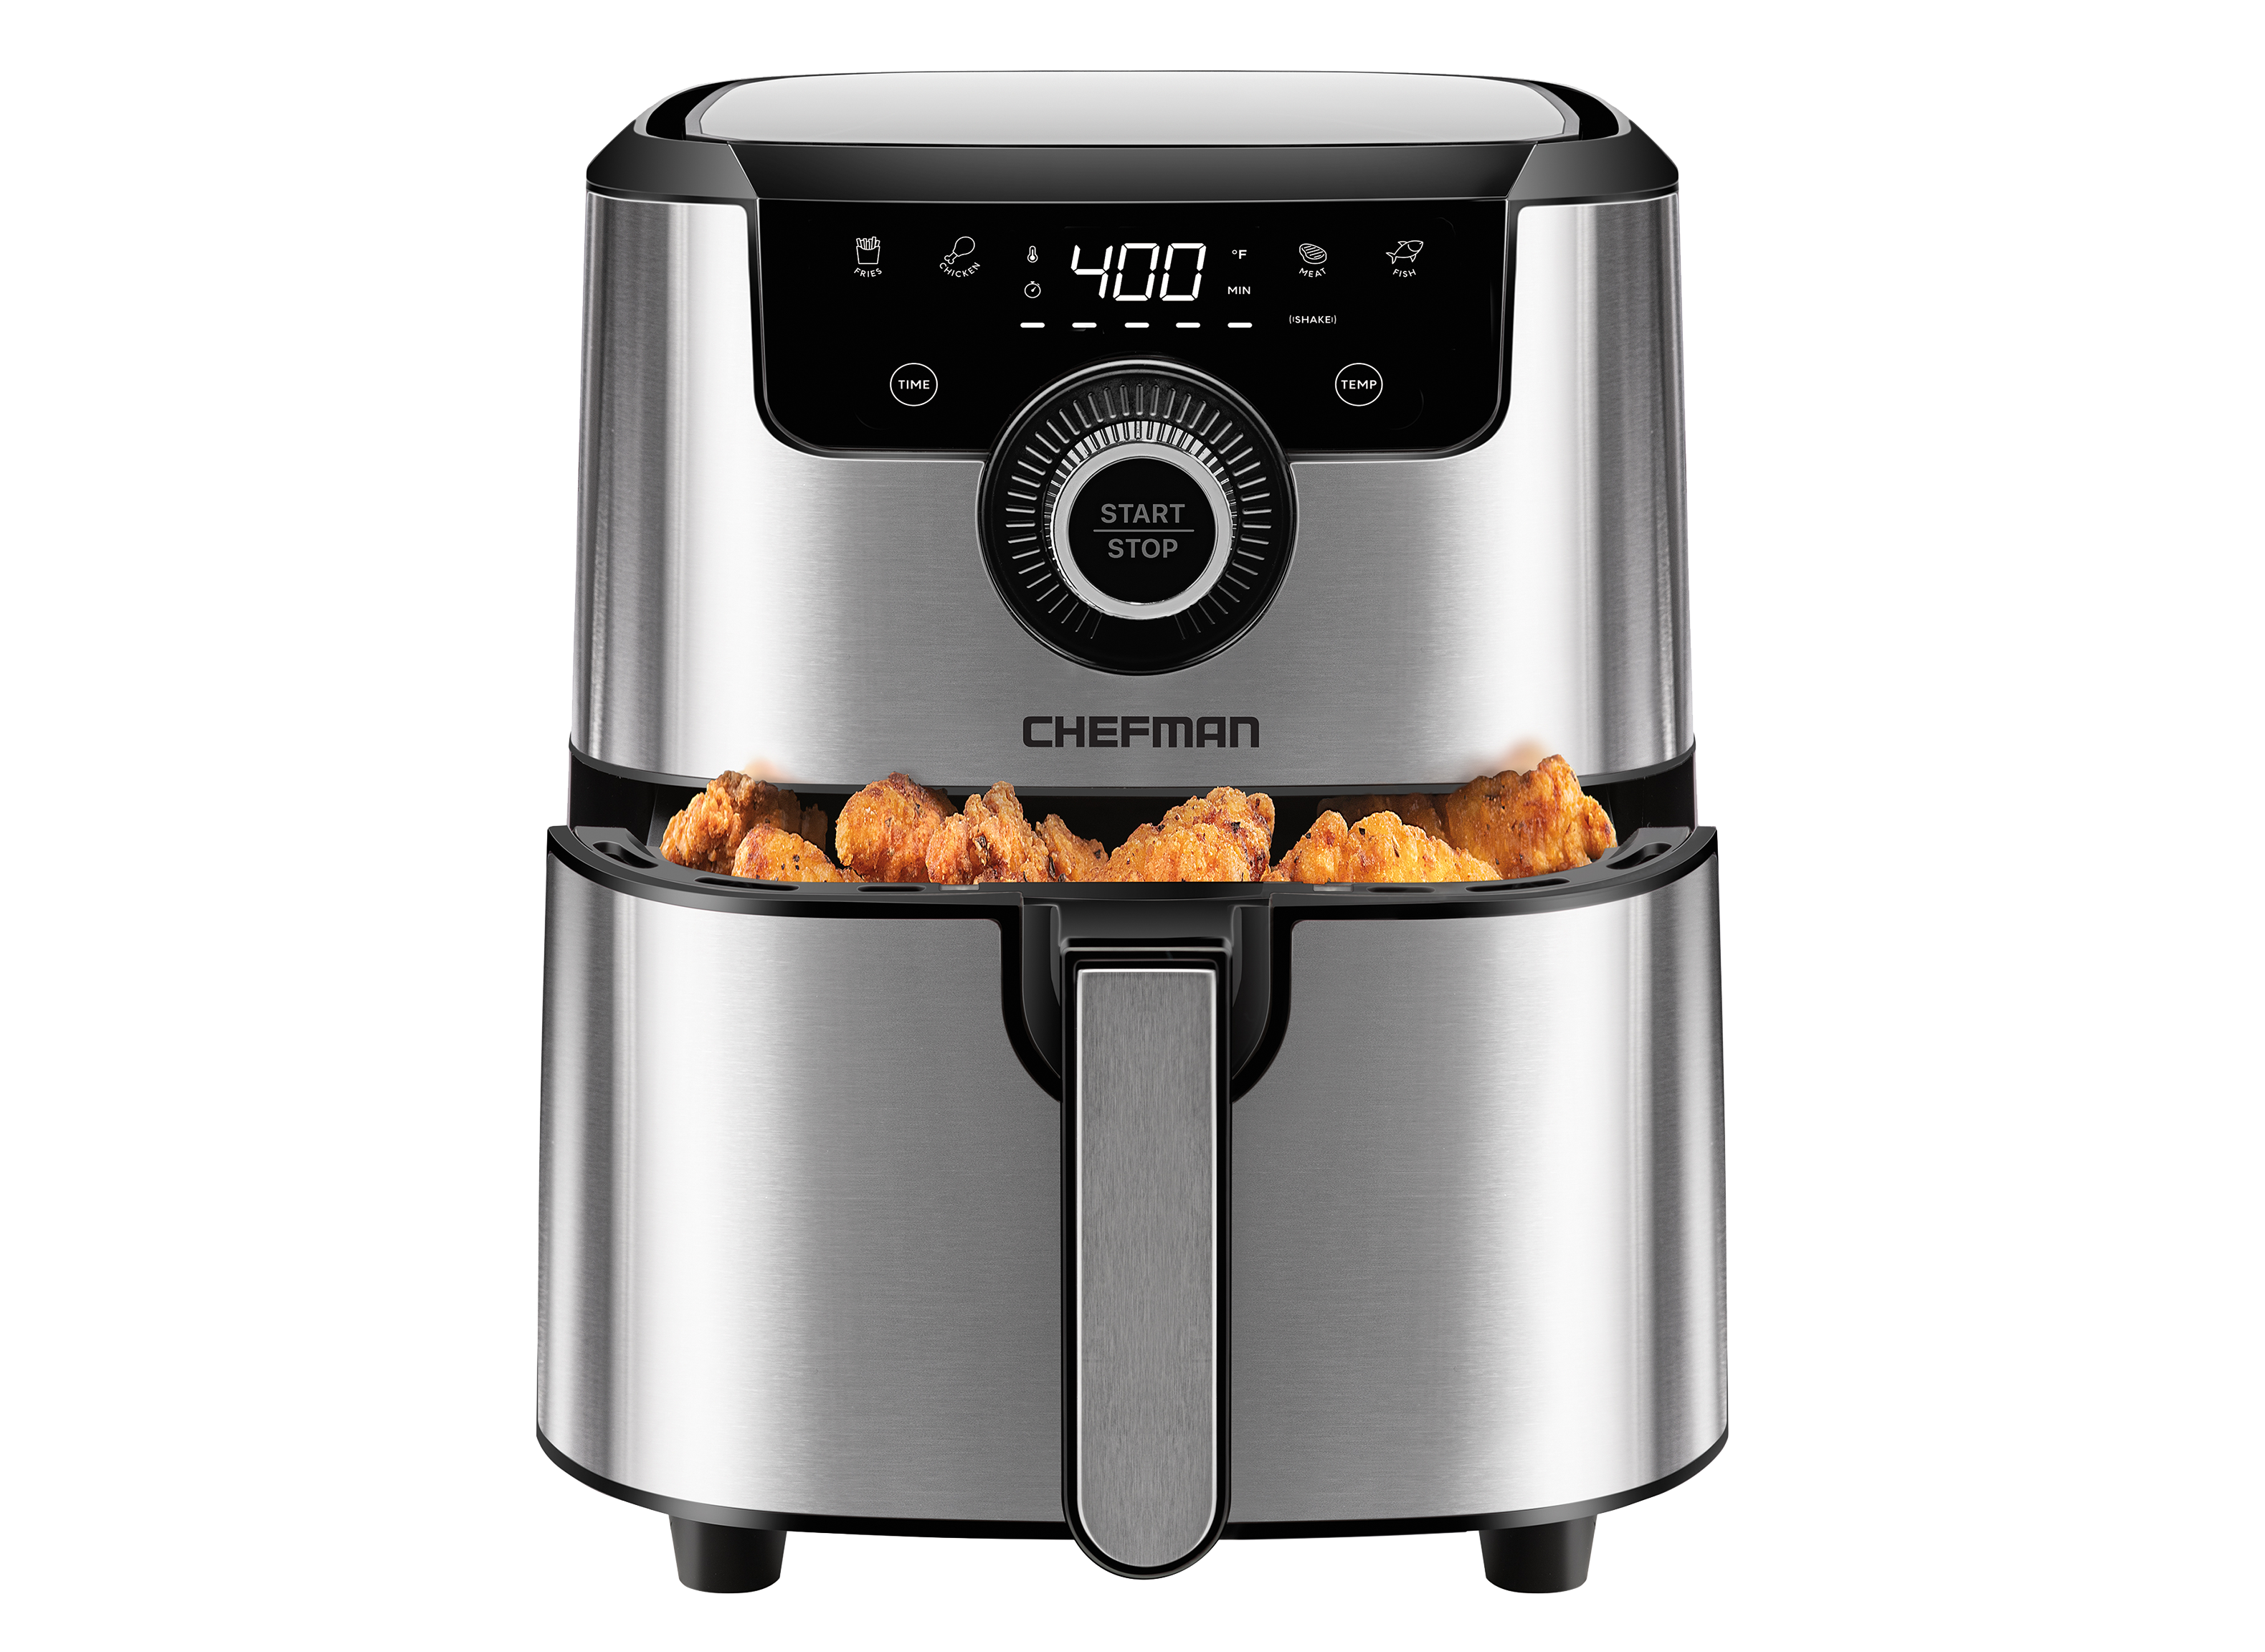 Chefman TurboFry Air Fryer 4.5 Quart Air Fryer - Consumer Reports